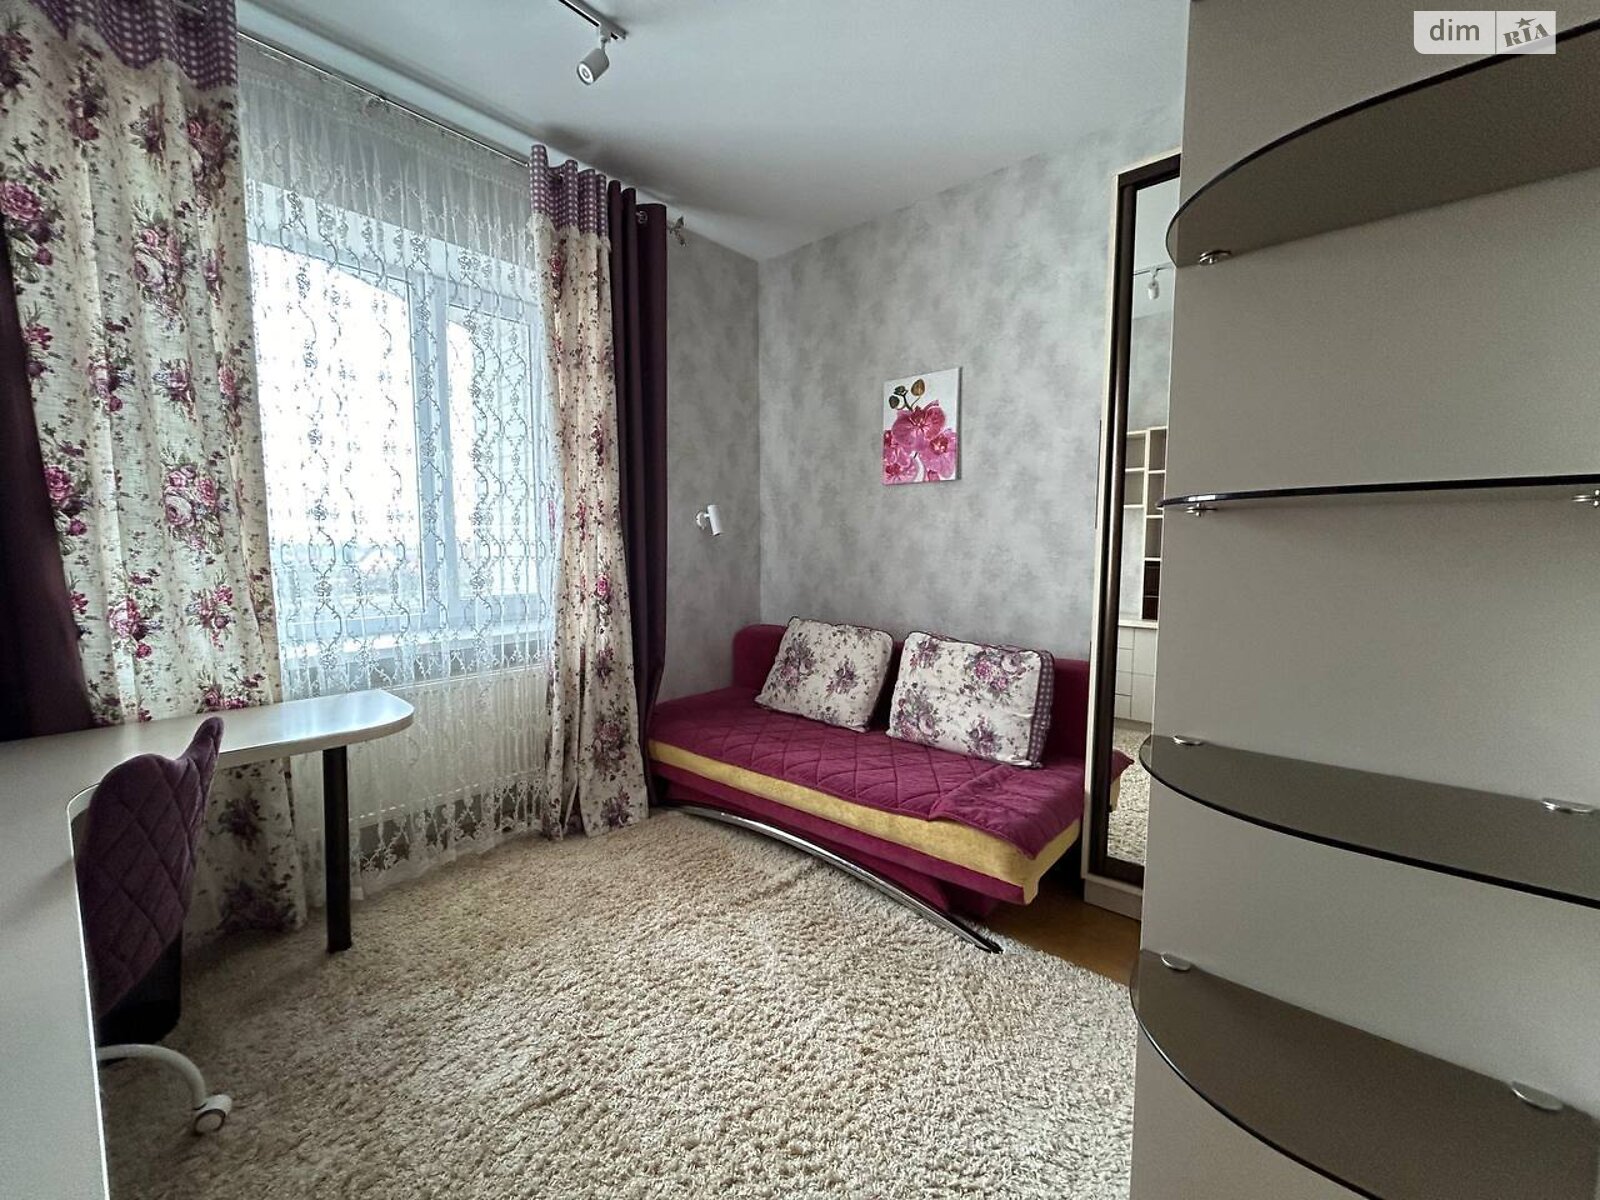 Продажа трехкомнатной квартиры в Змиенце, на ул. Васильковская, фото 1